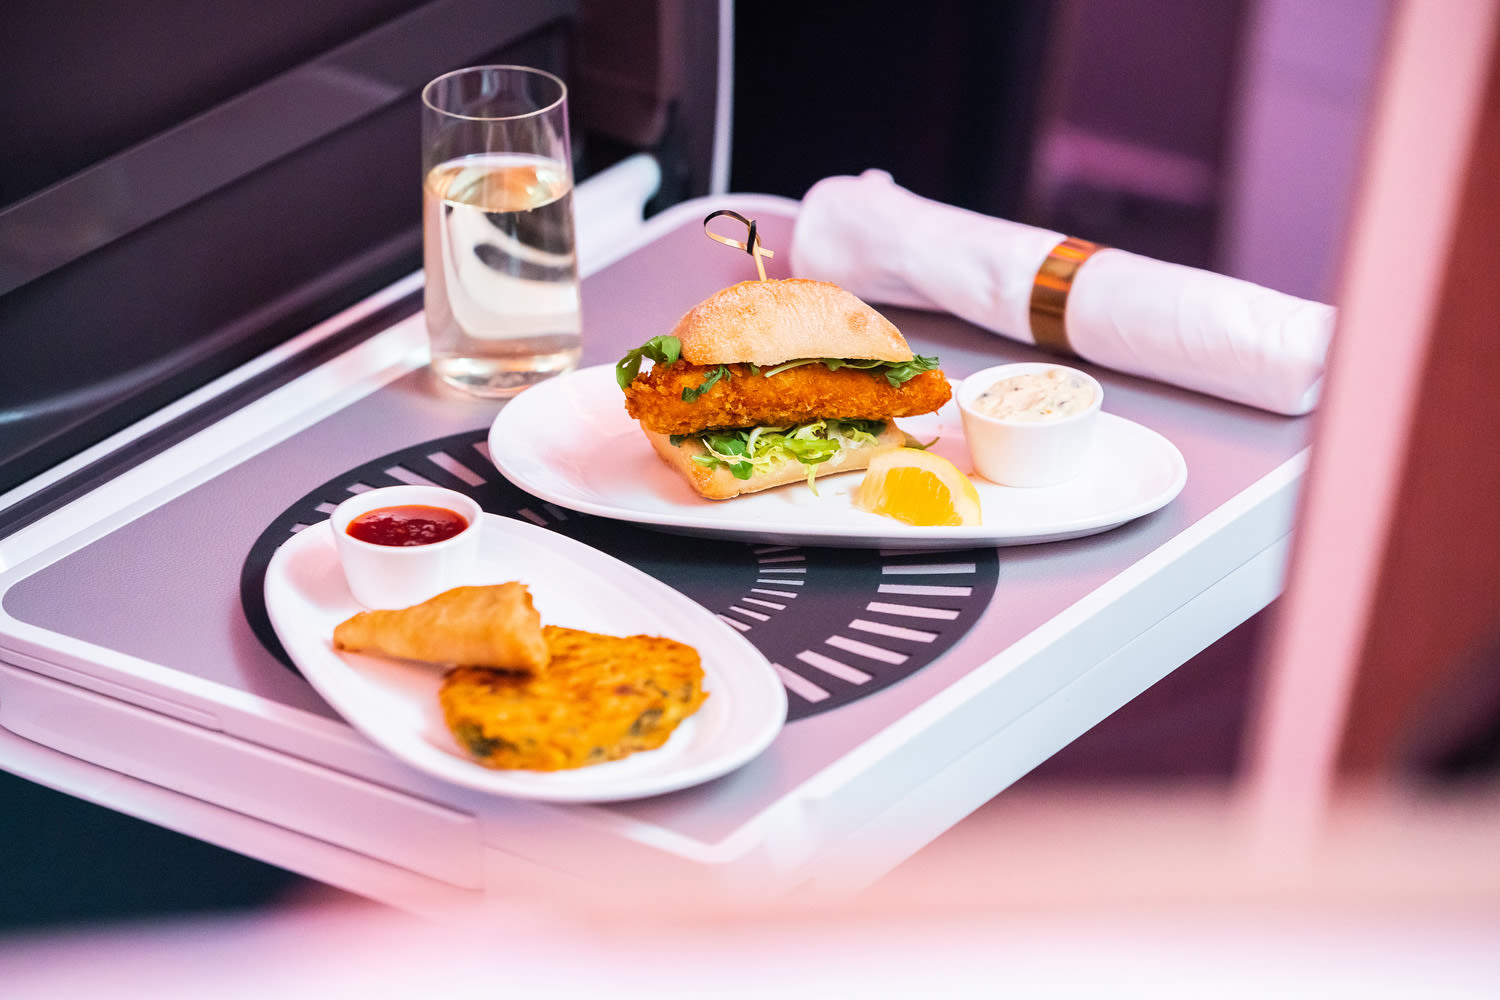 A meal onboard Virgin Atlantic